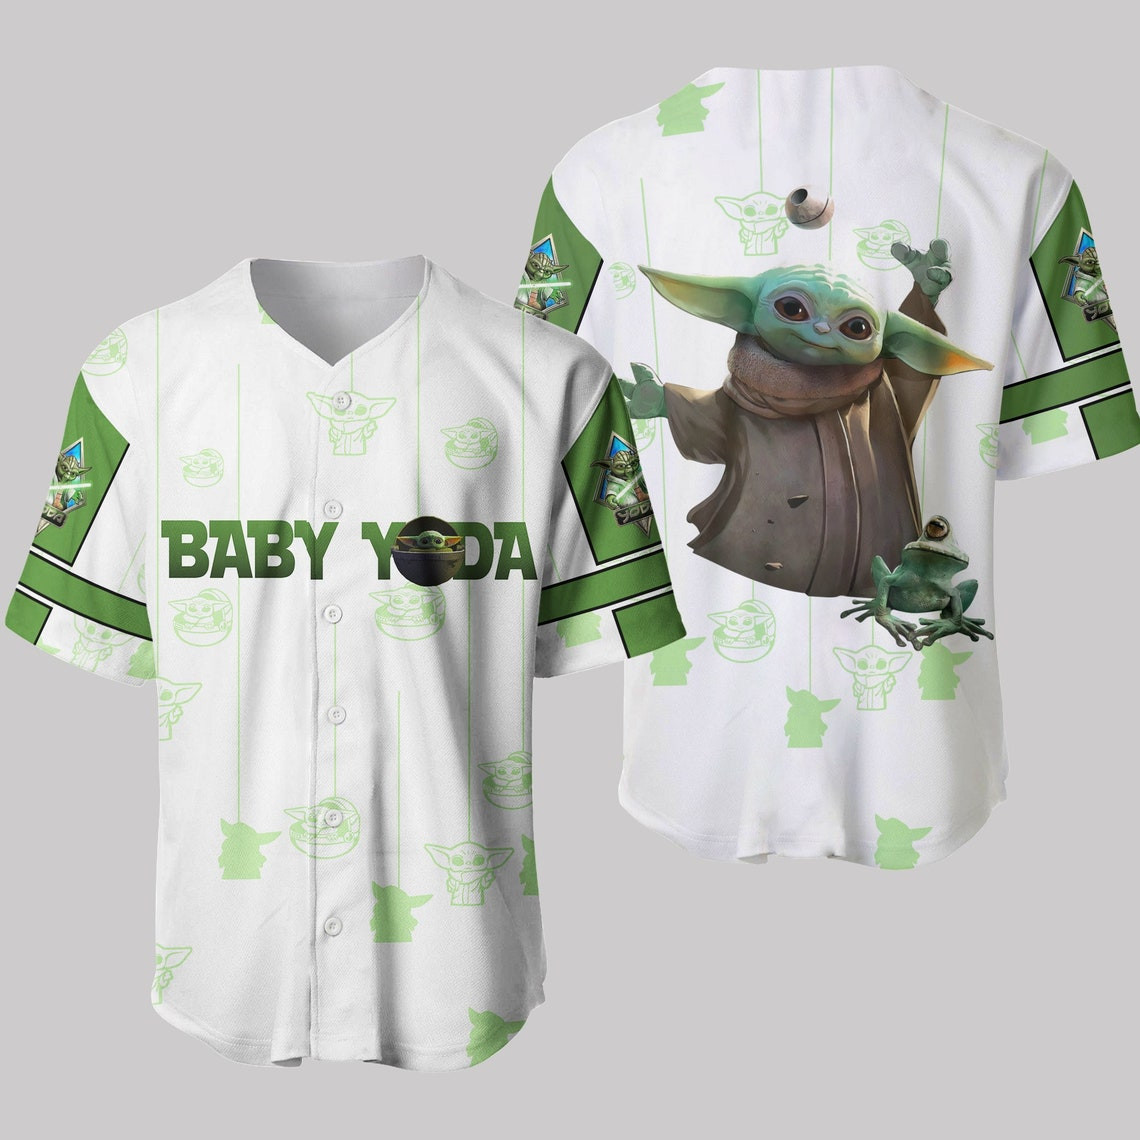 Star Wars Baby Yoda White Green Patterns Disney Unisex Cartoon Custom Baseball Jersey Personalized Shirt Men Women